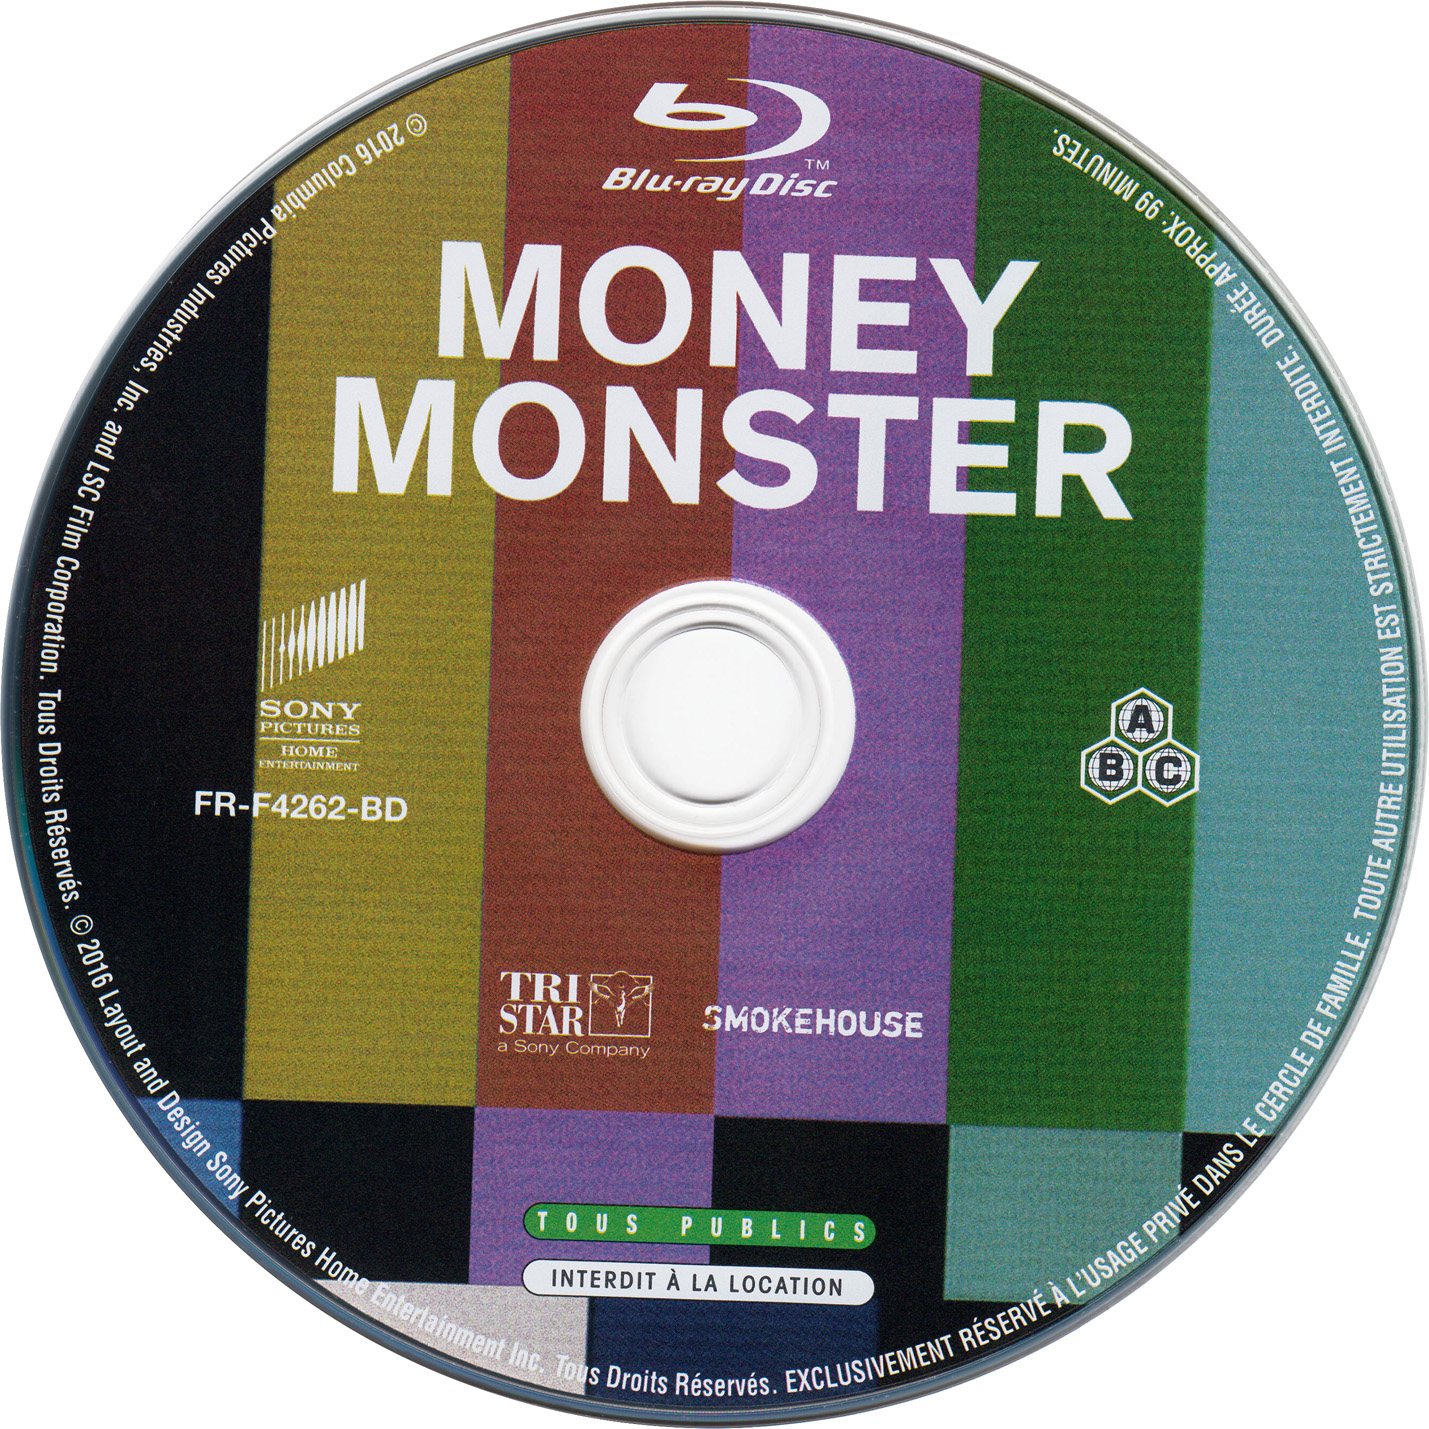 Money monster (BLU-RAY)